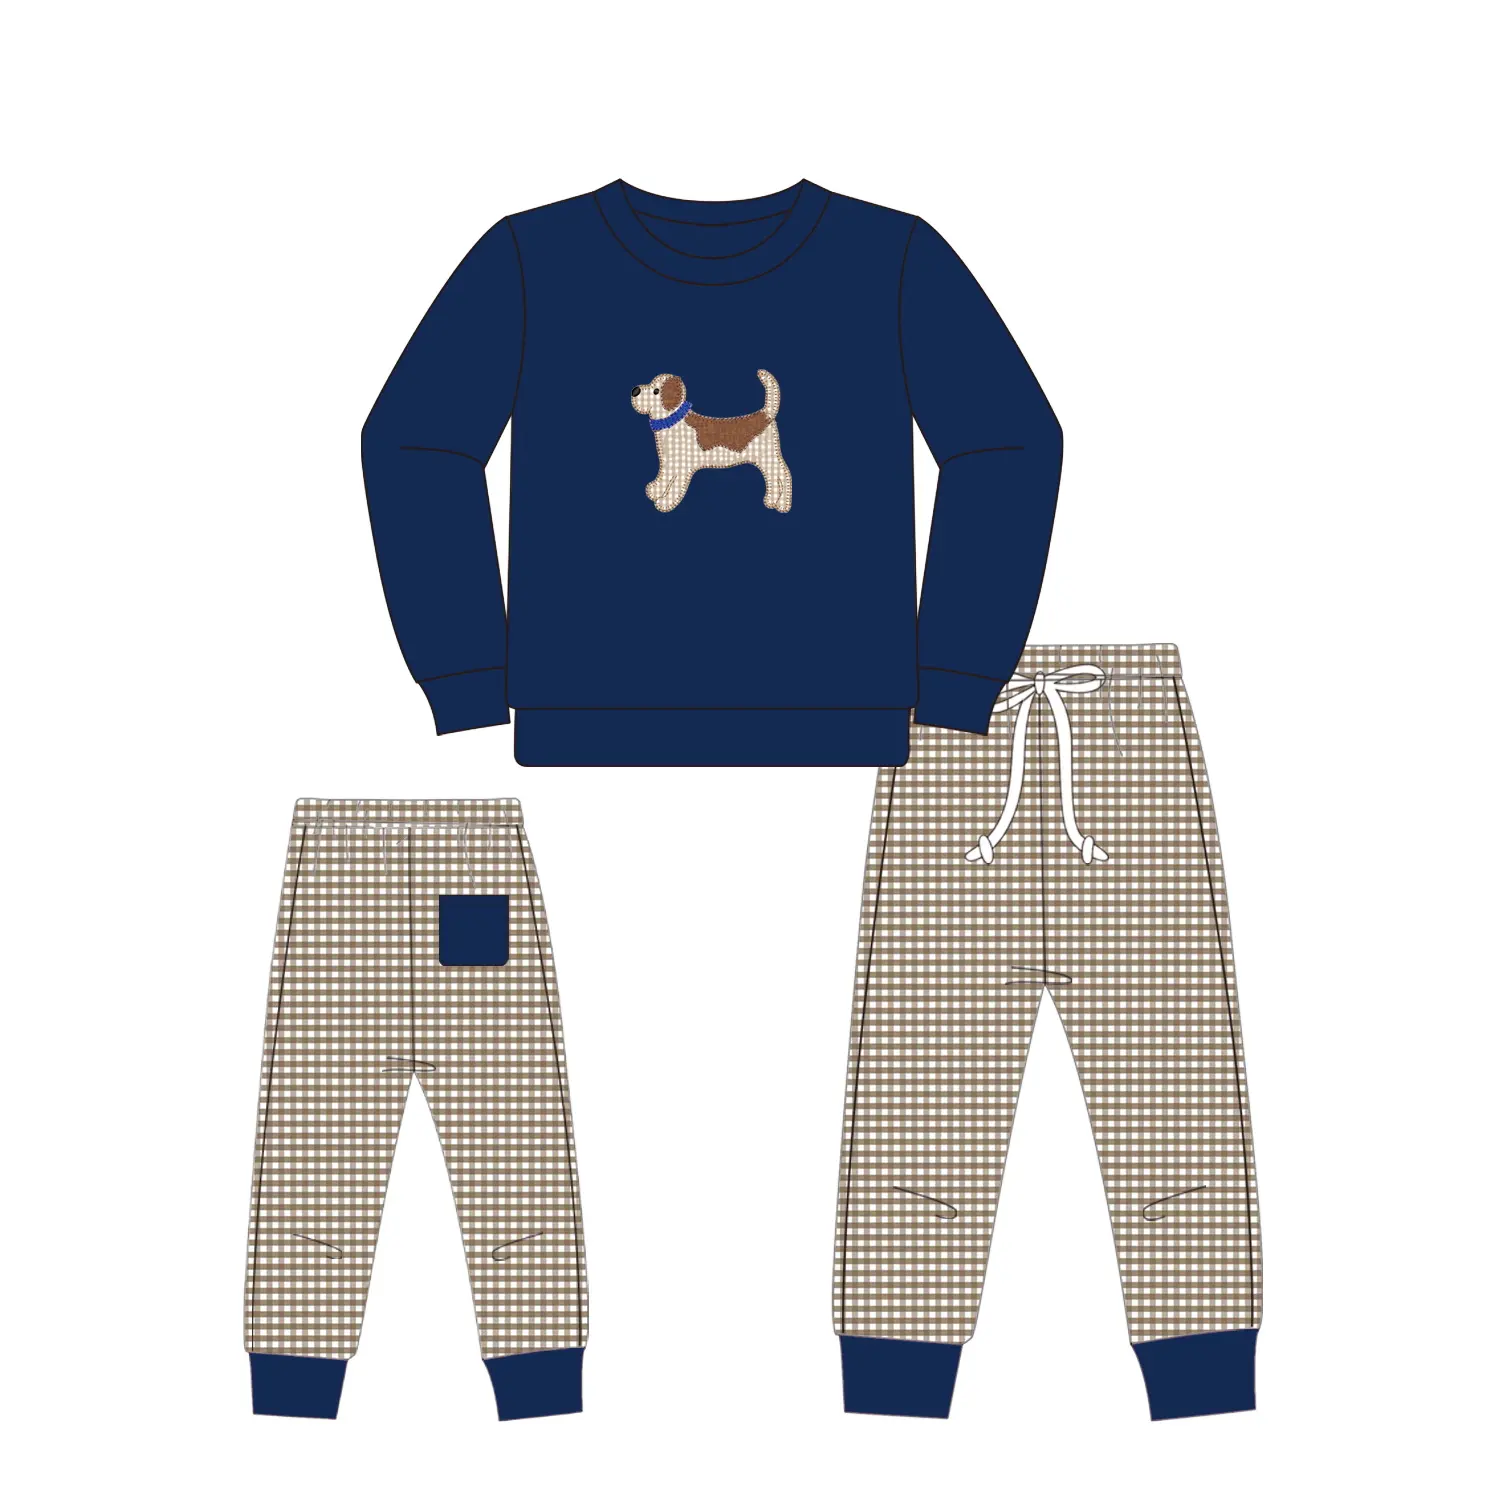 Boyis produk baru sesuai pesanan butik anjing applique set pakaian anak laki-laki hoodies kaus